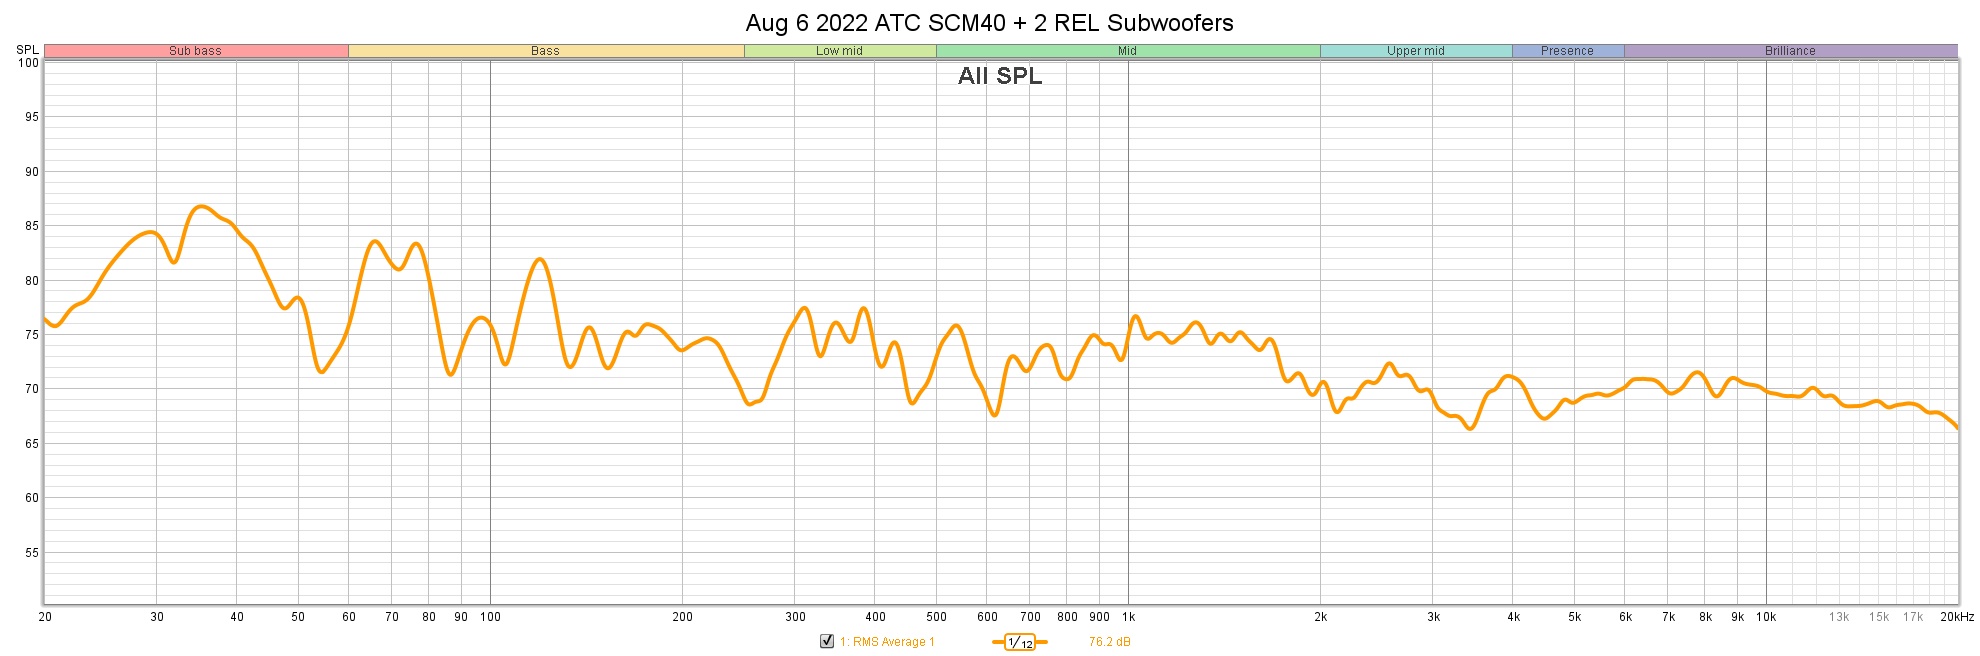 Aug 6 2022 ATC SCM40 + 2 REL Subwoofers.jpg